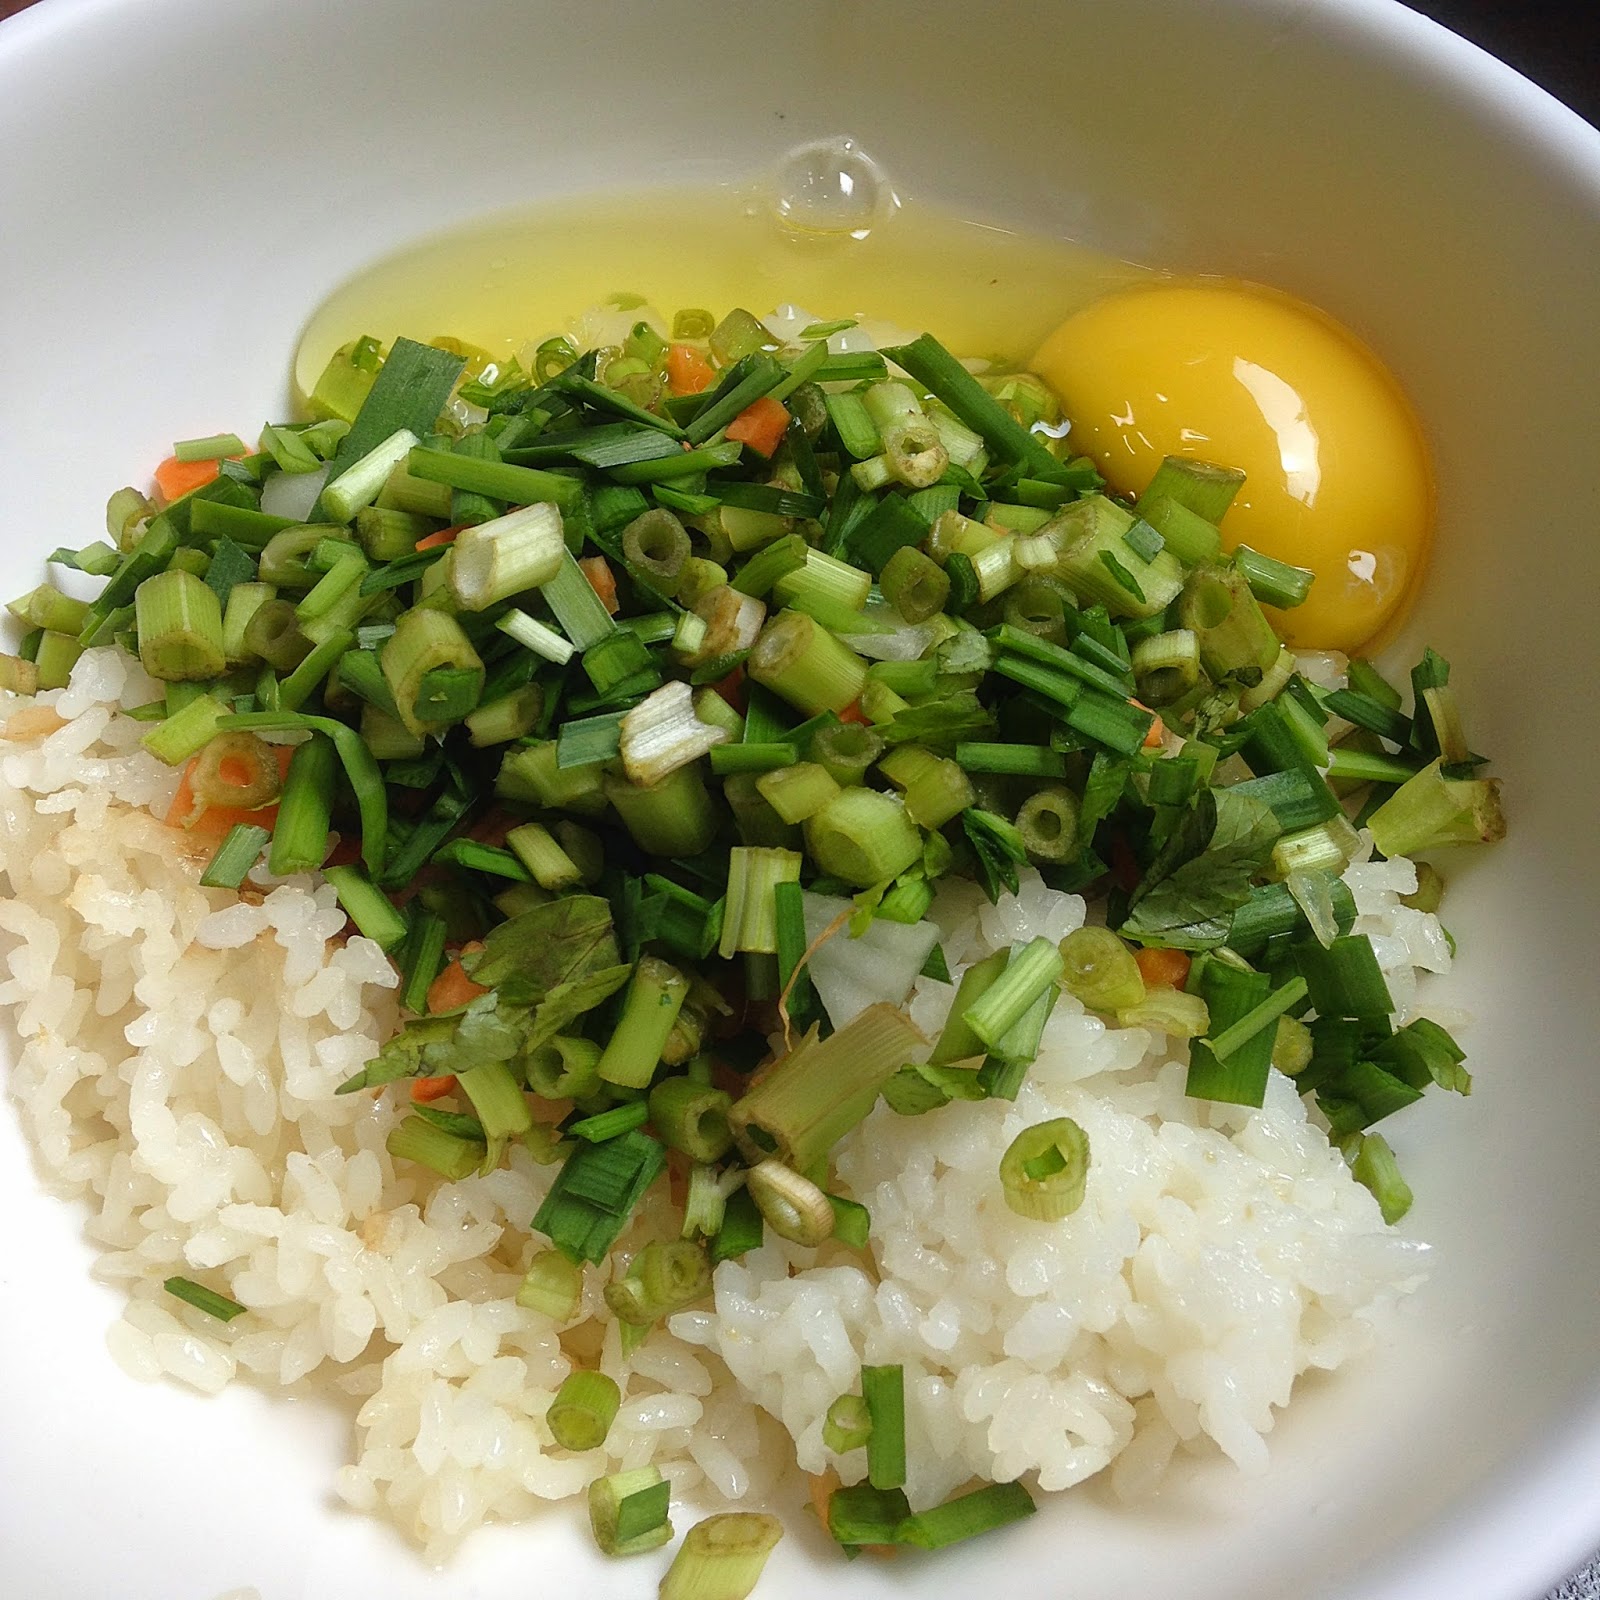 Hot Pot Recipe How to Korean Hot Pot at Home Deungchon Kalguksu Shabu Shabu  & Fried Rice at the End! 